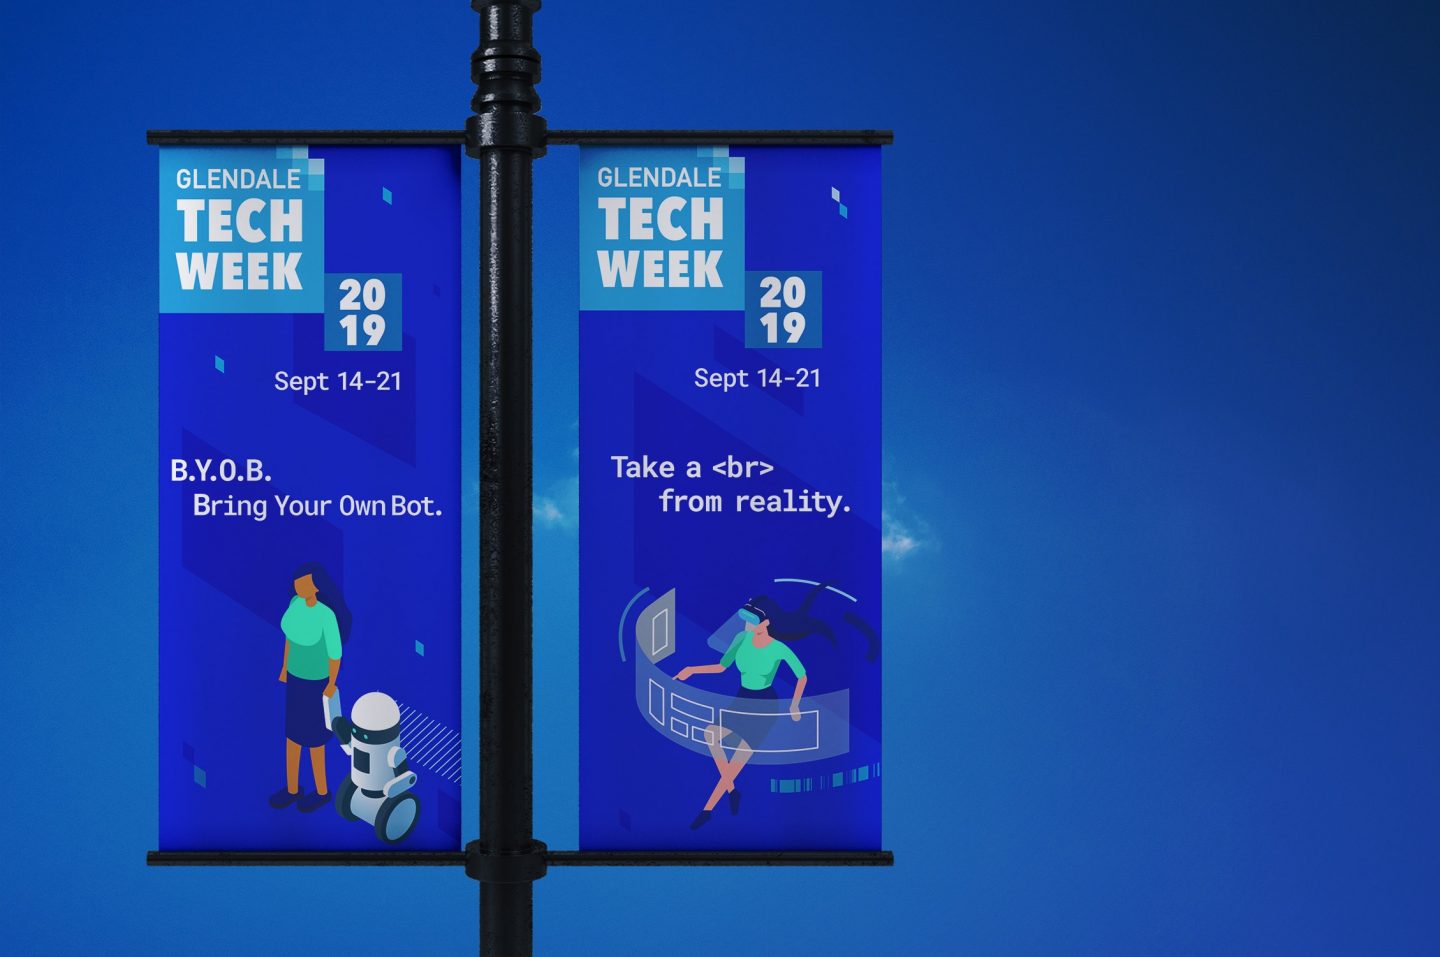 Print OOH mockup of Glendale Tech Week logo event